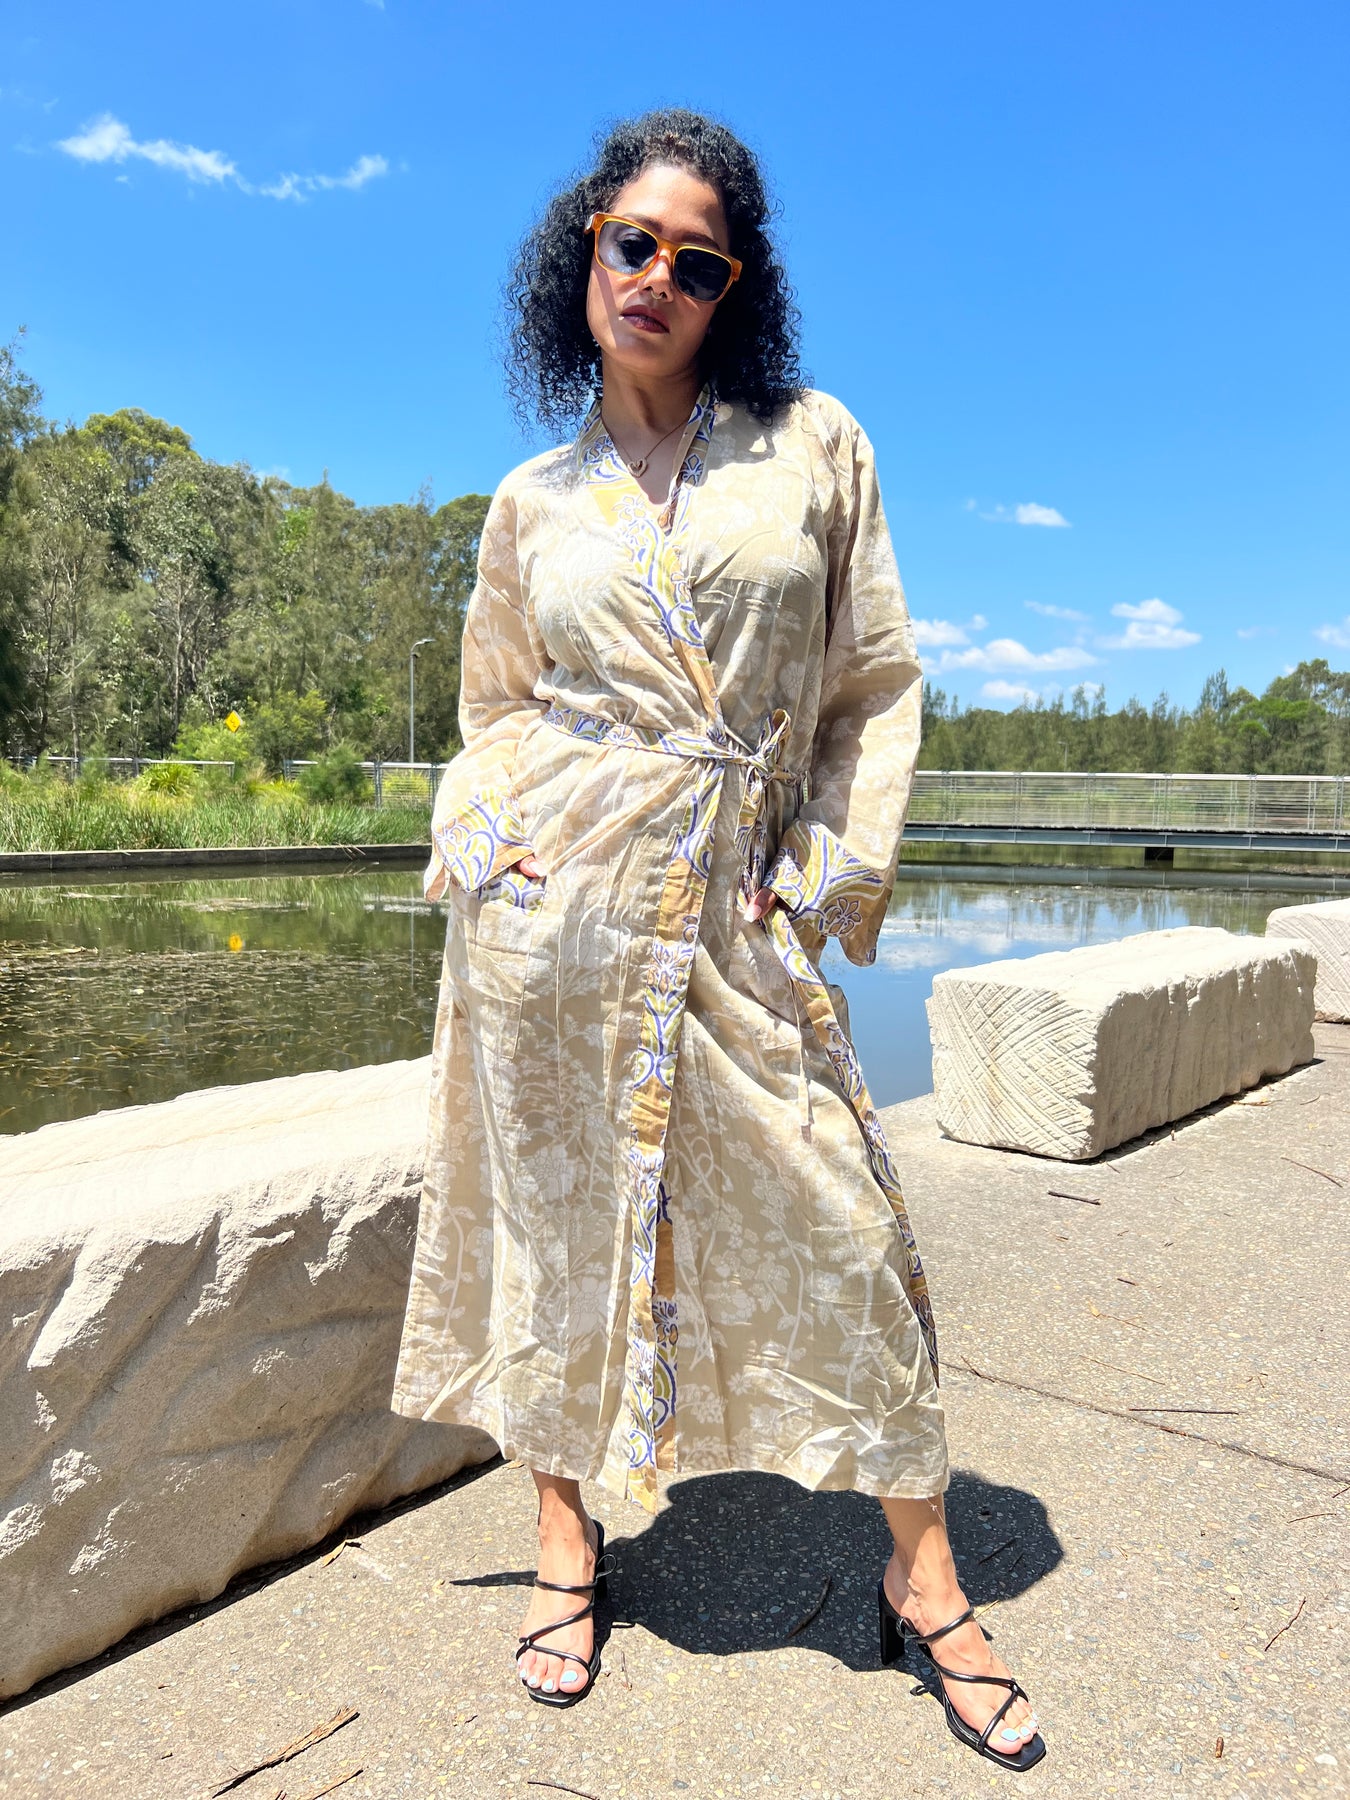 Kimono Robes - Eesha Boutique Australia – EeshaBoutique